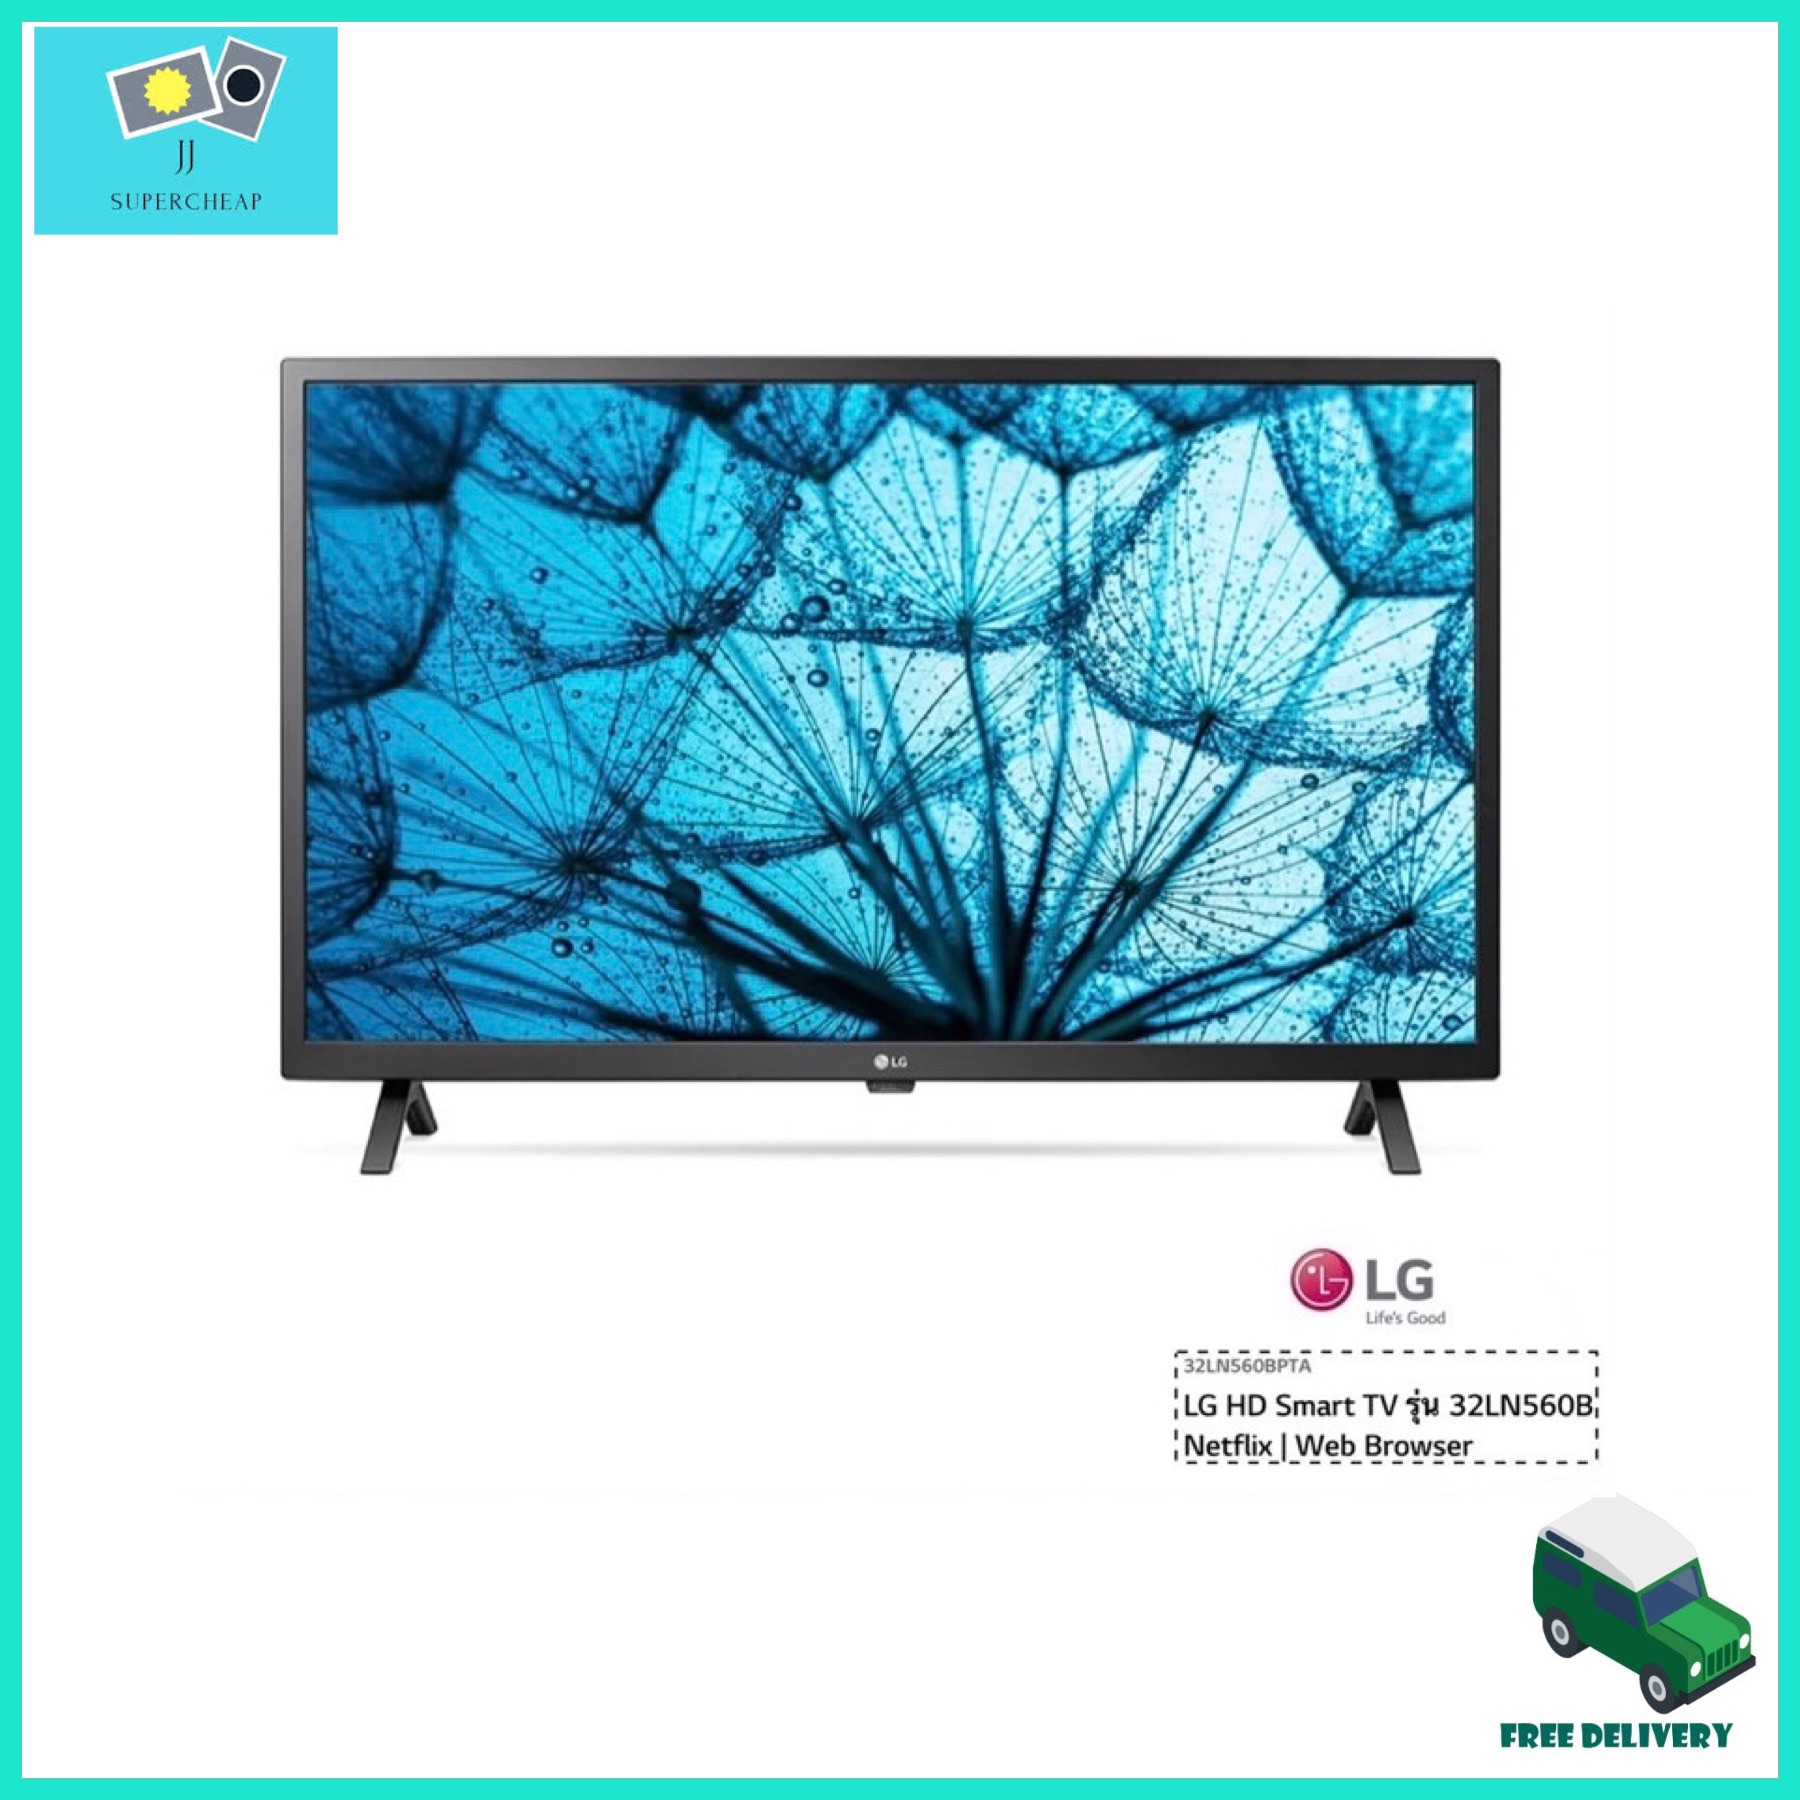 LG LED HD Smart TV 32LN560B รุ่น 32LN560BPTA (Netflix ,Web Browser,รับประกัน LG 1 ปี)